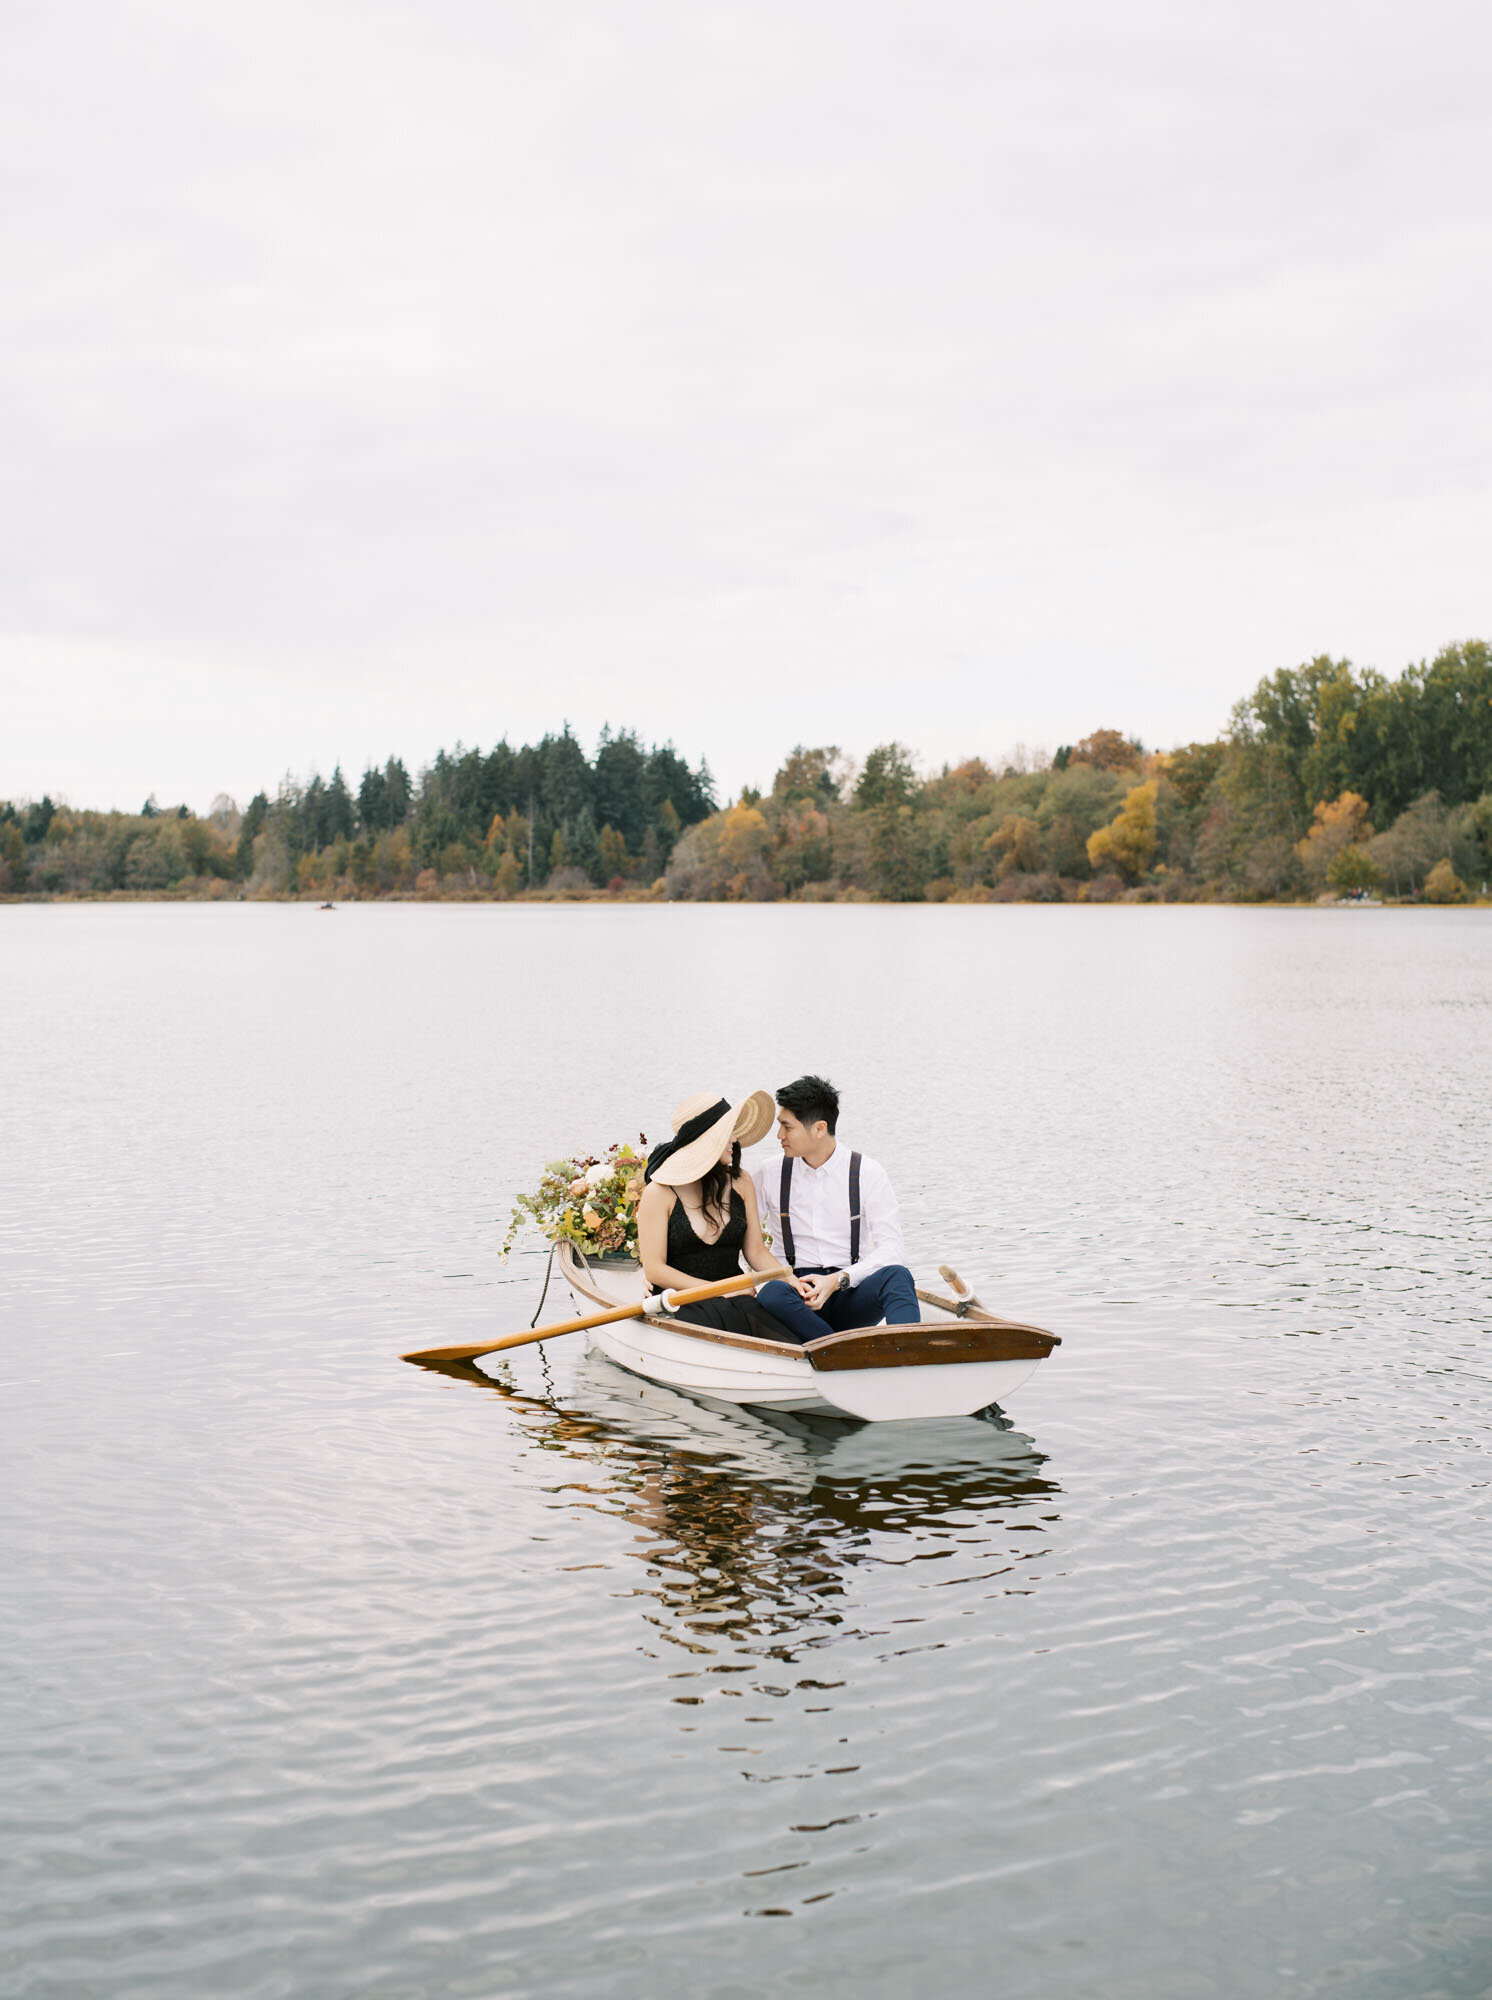 DeerLake+Boat+Engagement+Saminphotography+12.jpg